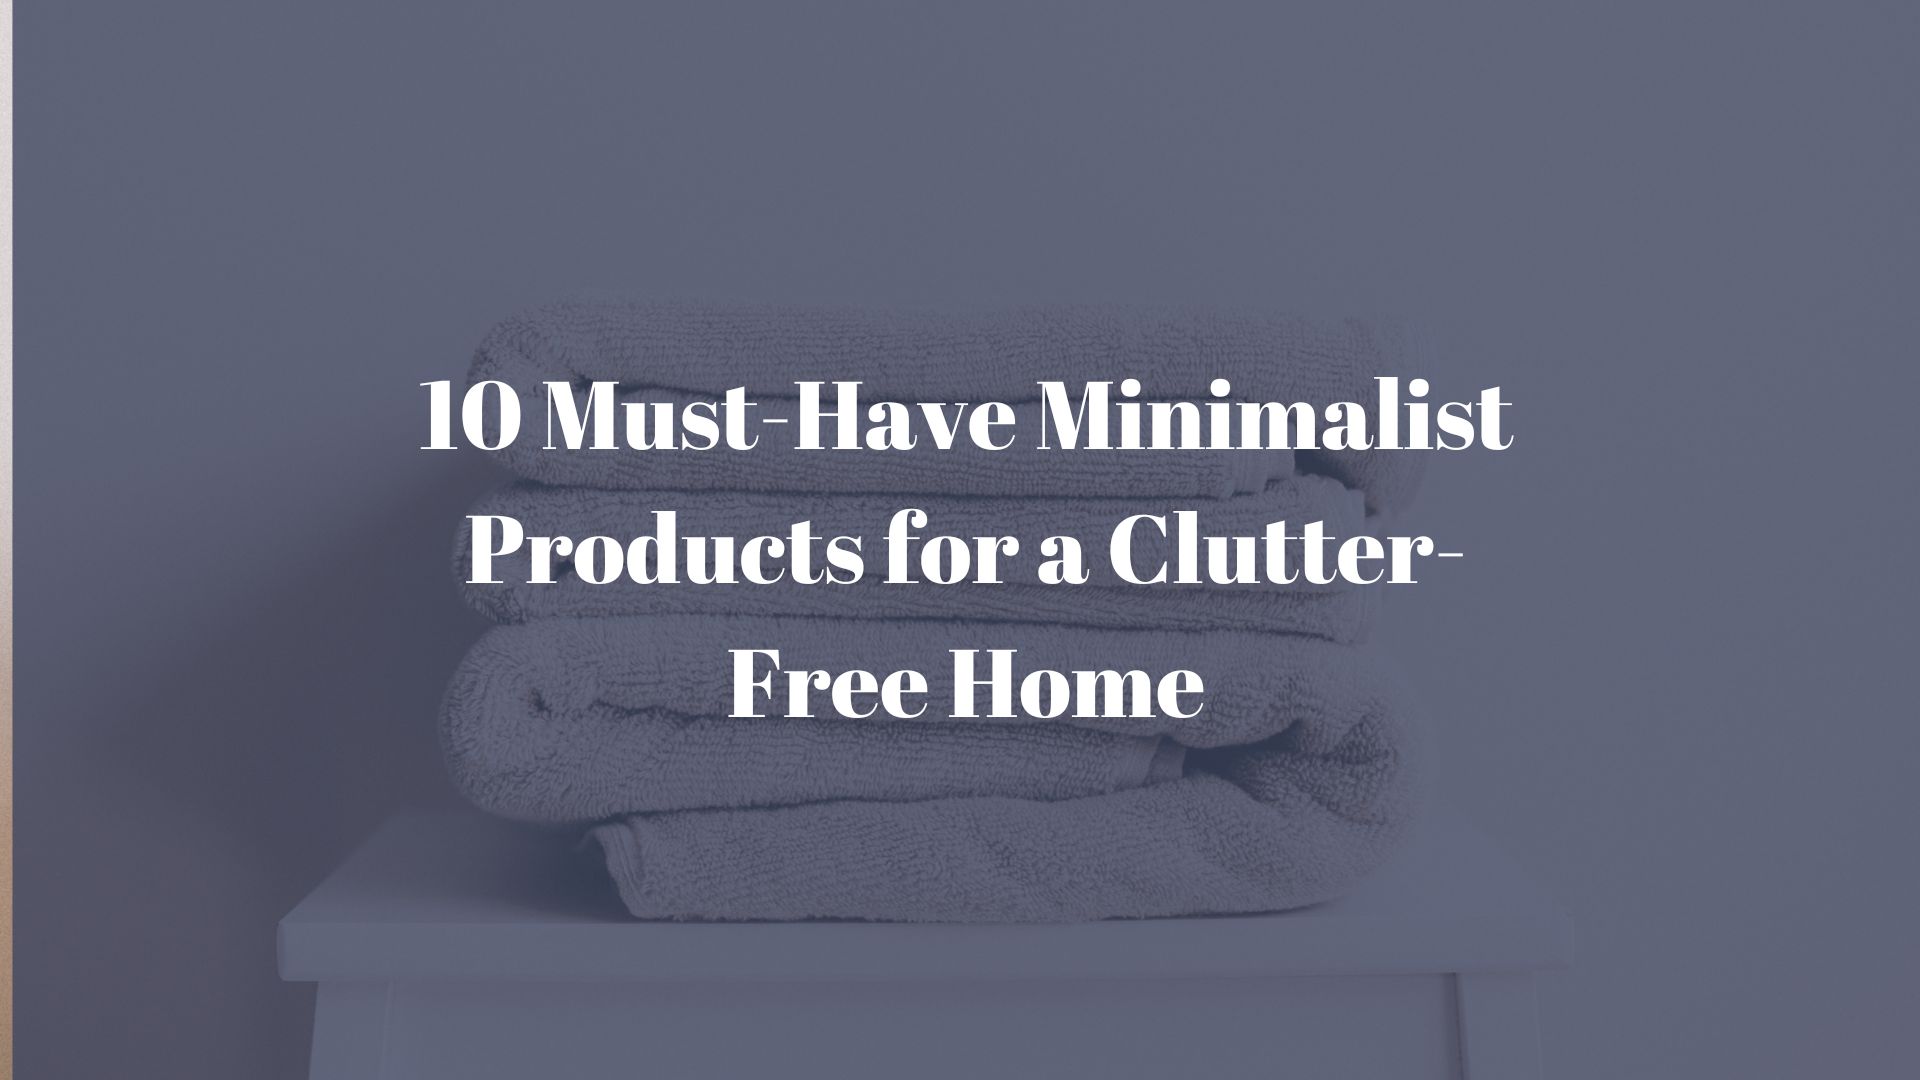 Minimalist Products